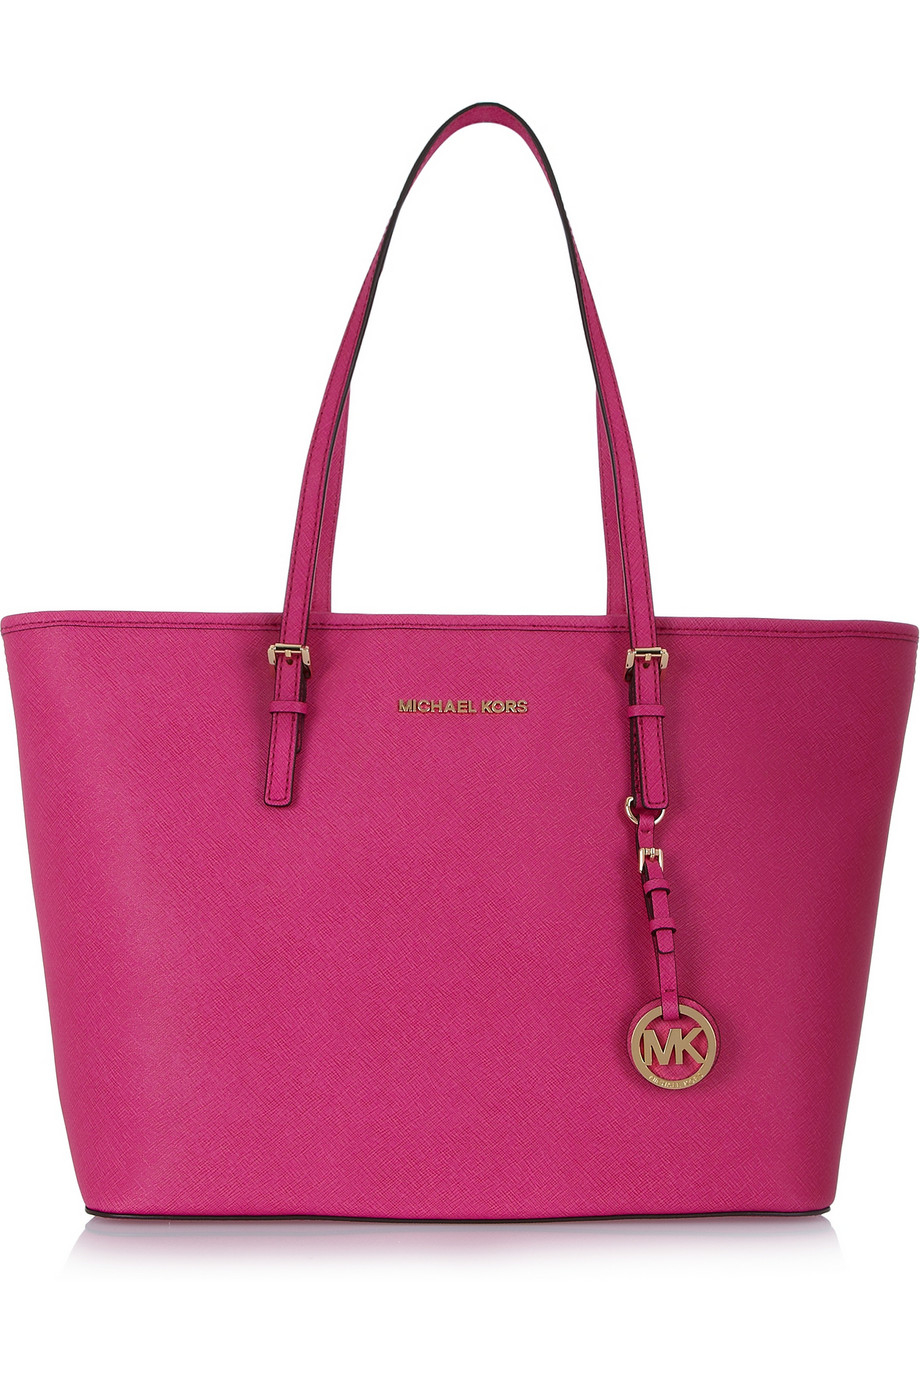 Michael Kors, Bags, Michael Kors Mauve Pink Tote Bag New